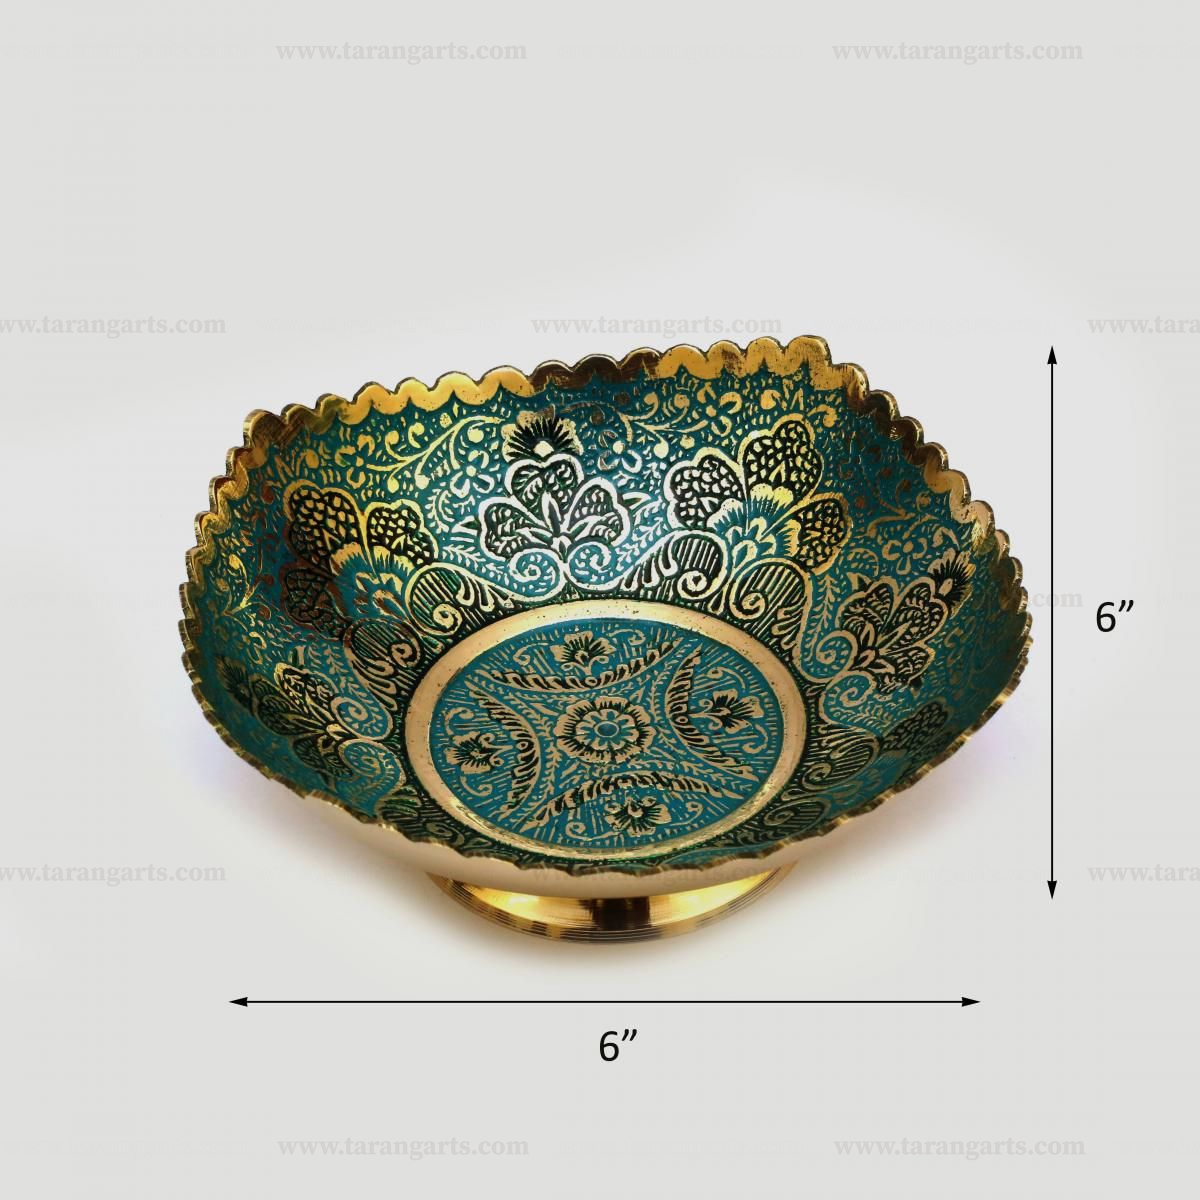 Buy Indian Brass Decor Online, Indian Handicrafts Online